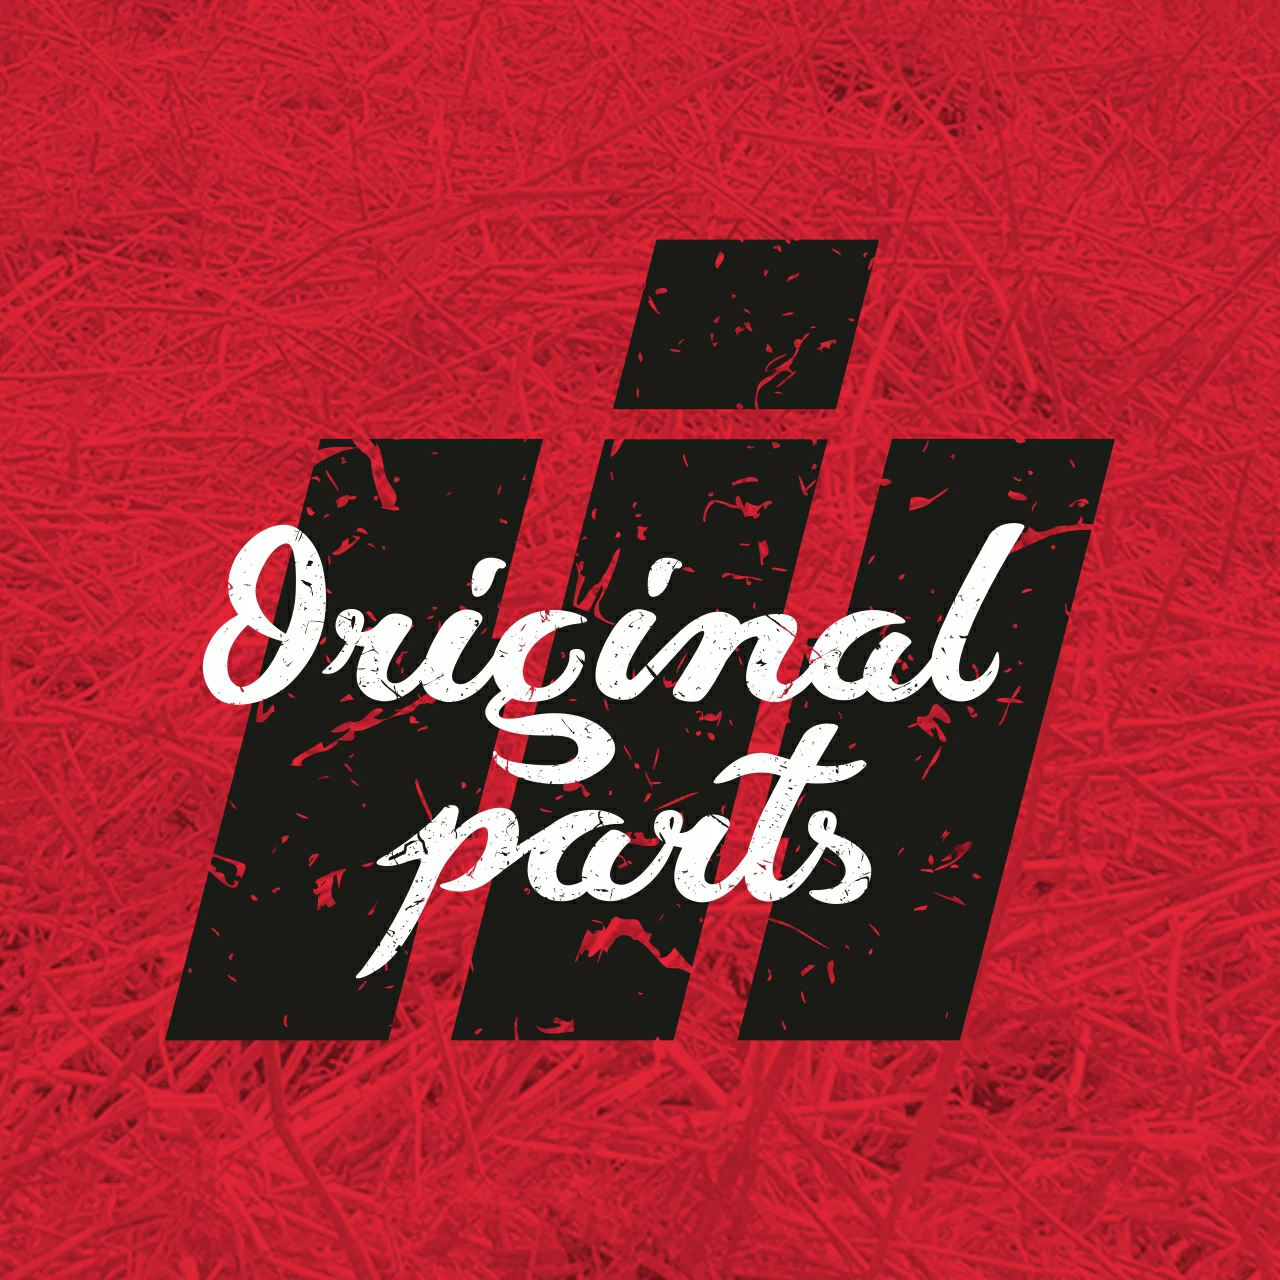 Case IH Original Parts - Kaligrafie